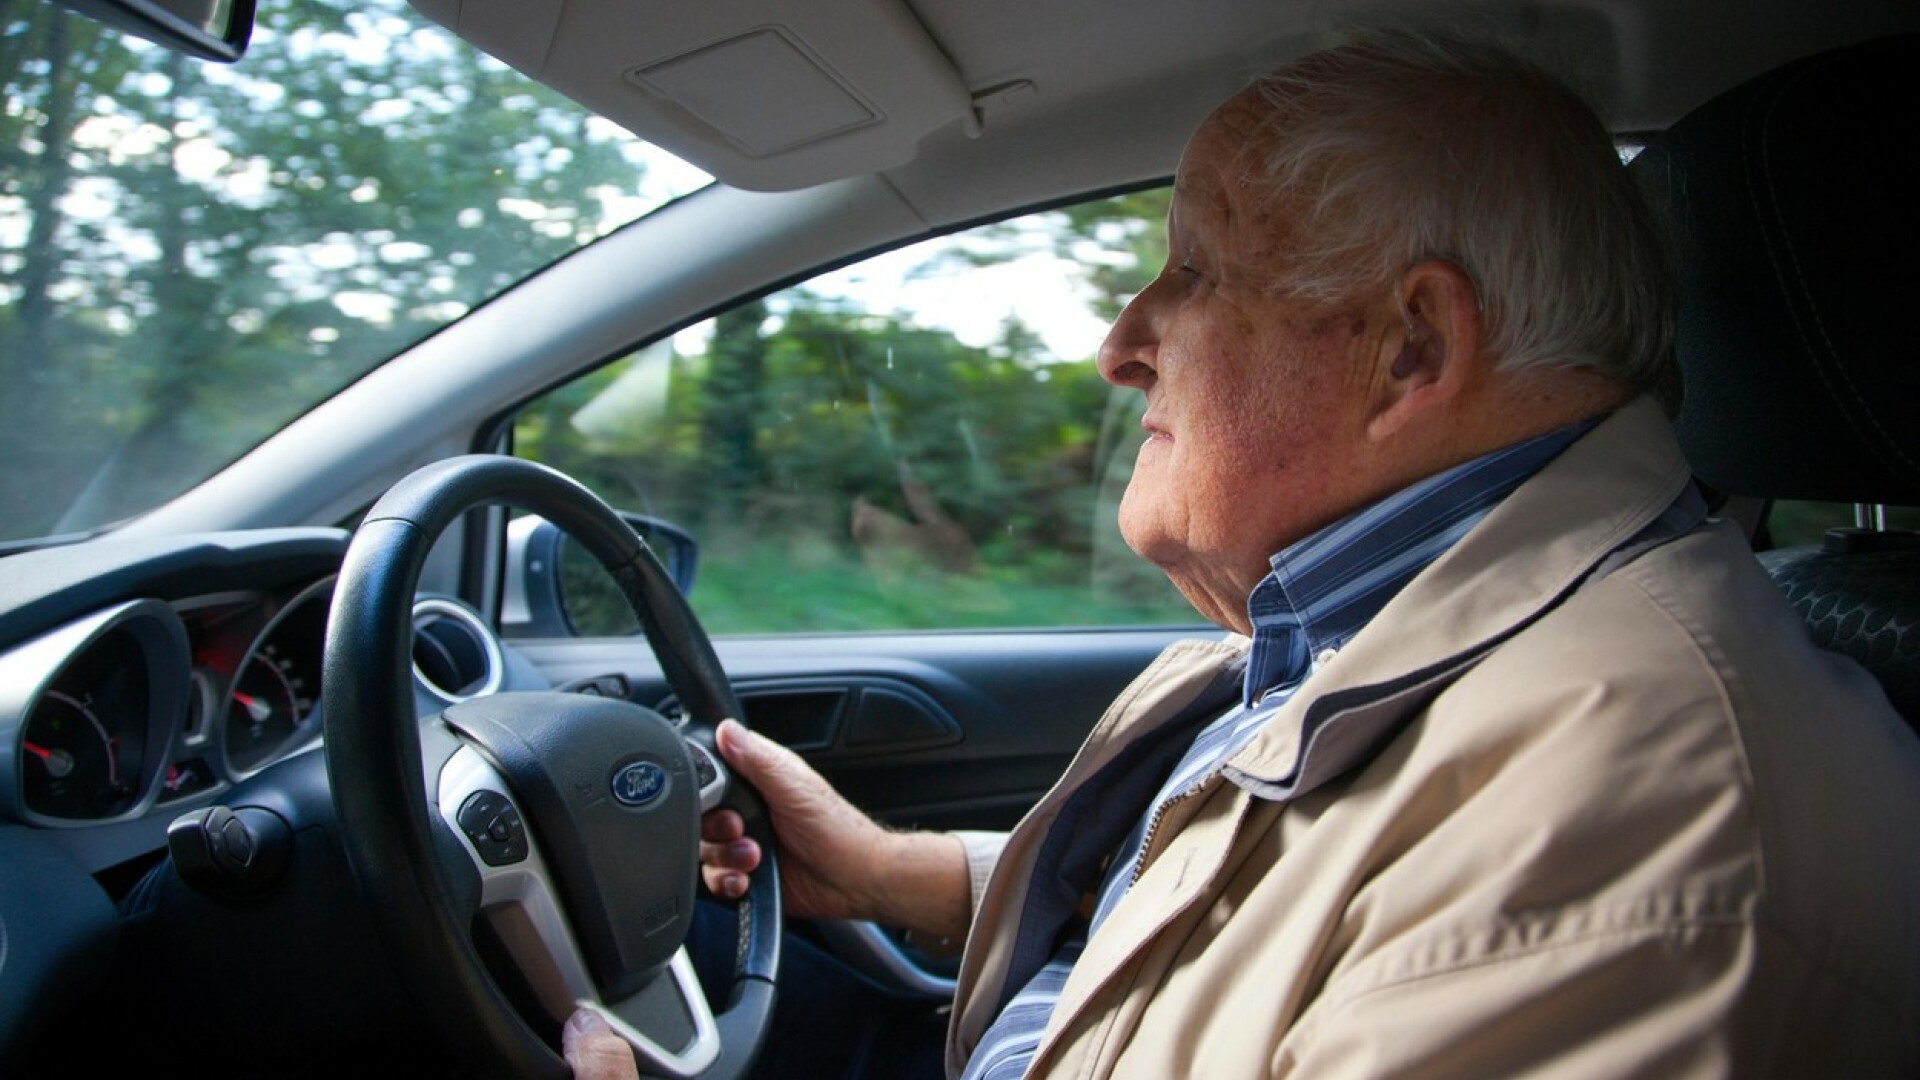 șofer bătrân